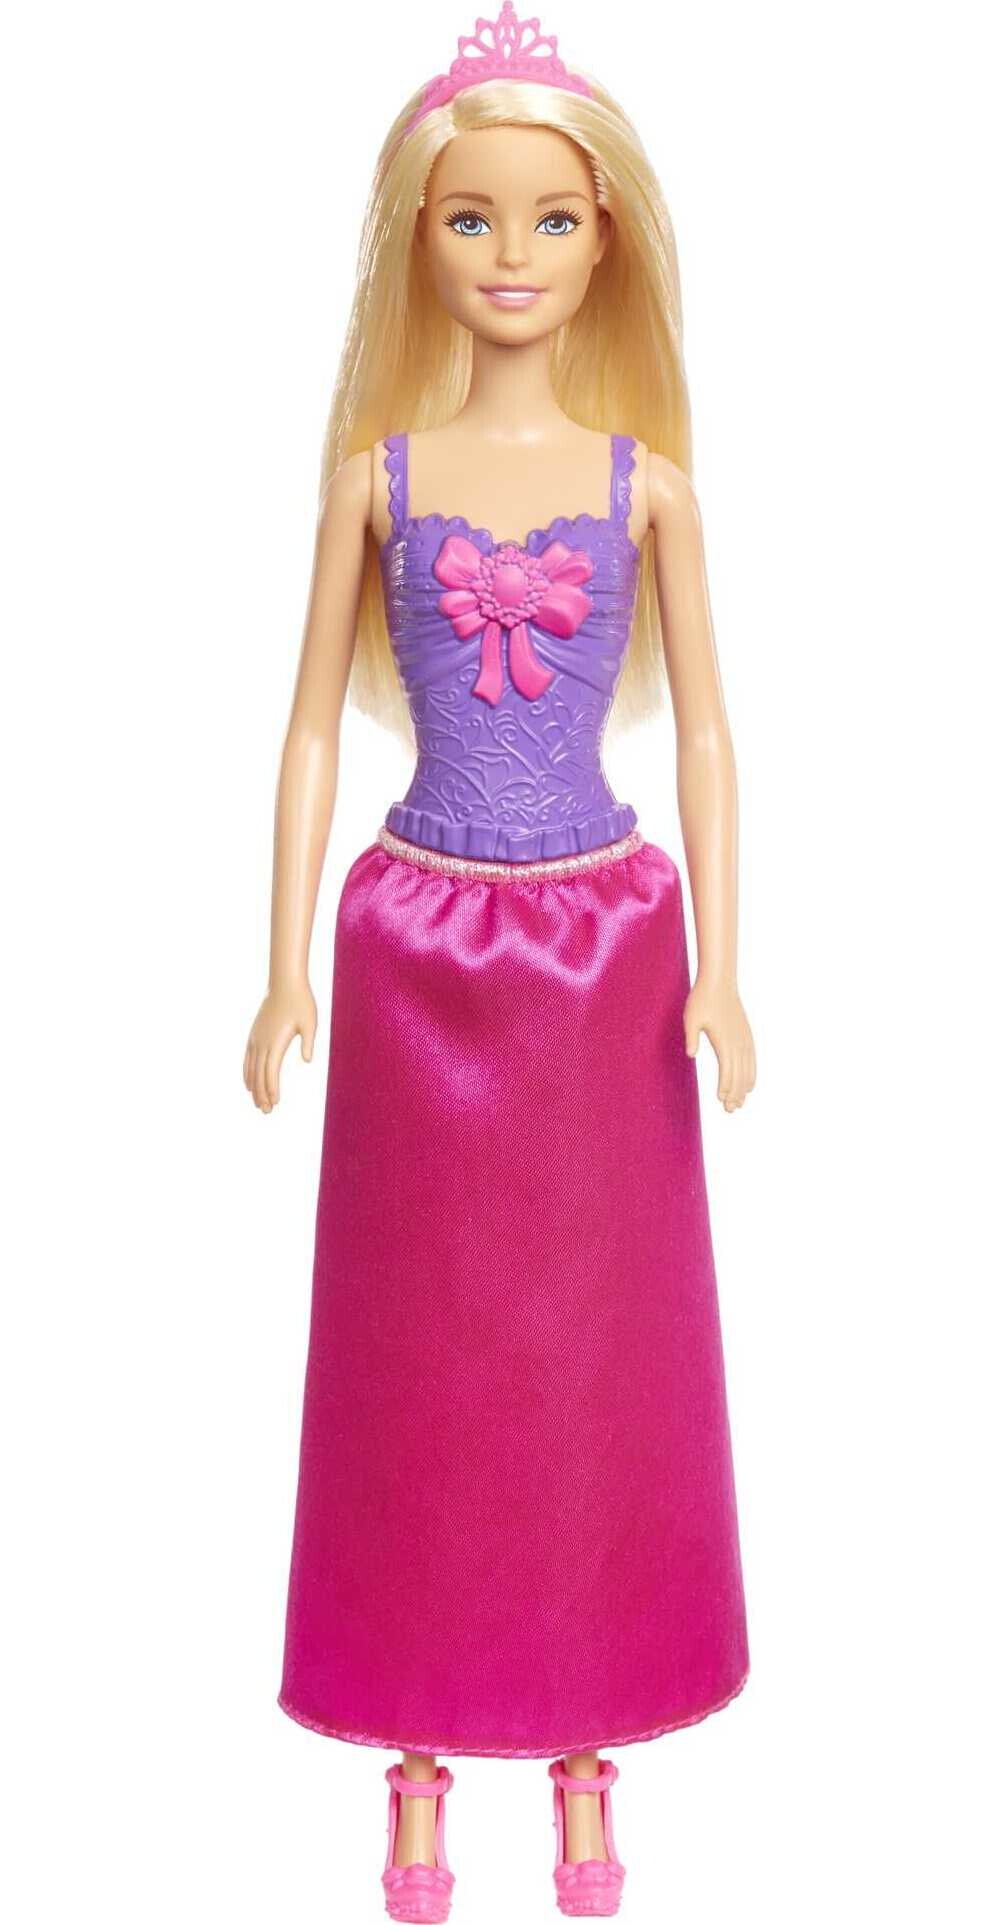 Officier Ik wil niet helikopter Barbie Dreamtopia Royal Doll with Blonde Hair, Shimmery Pink Skirt & Tiara  Accessory - Walmart.com